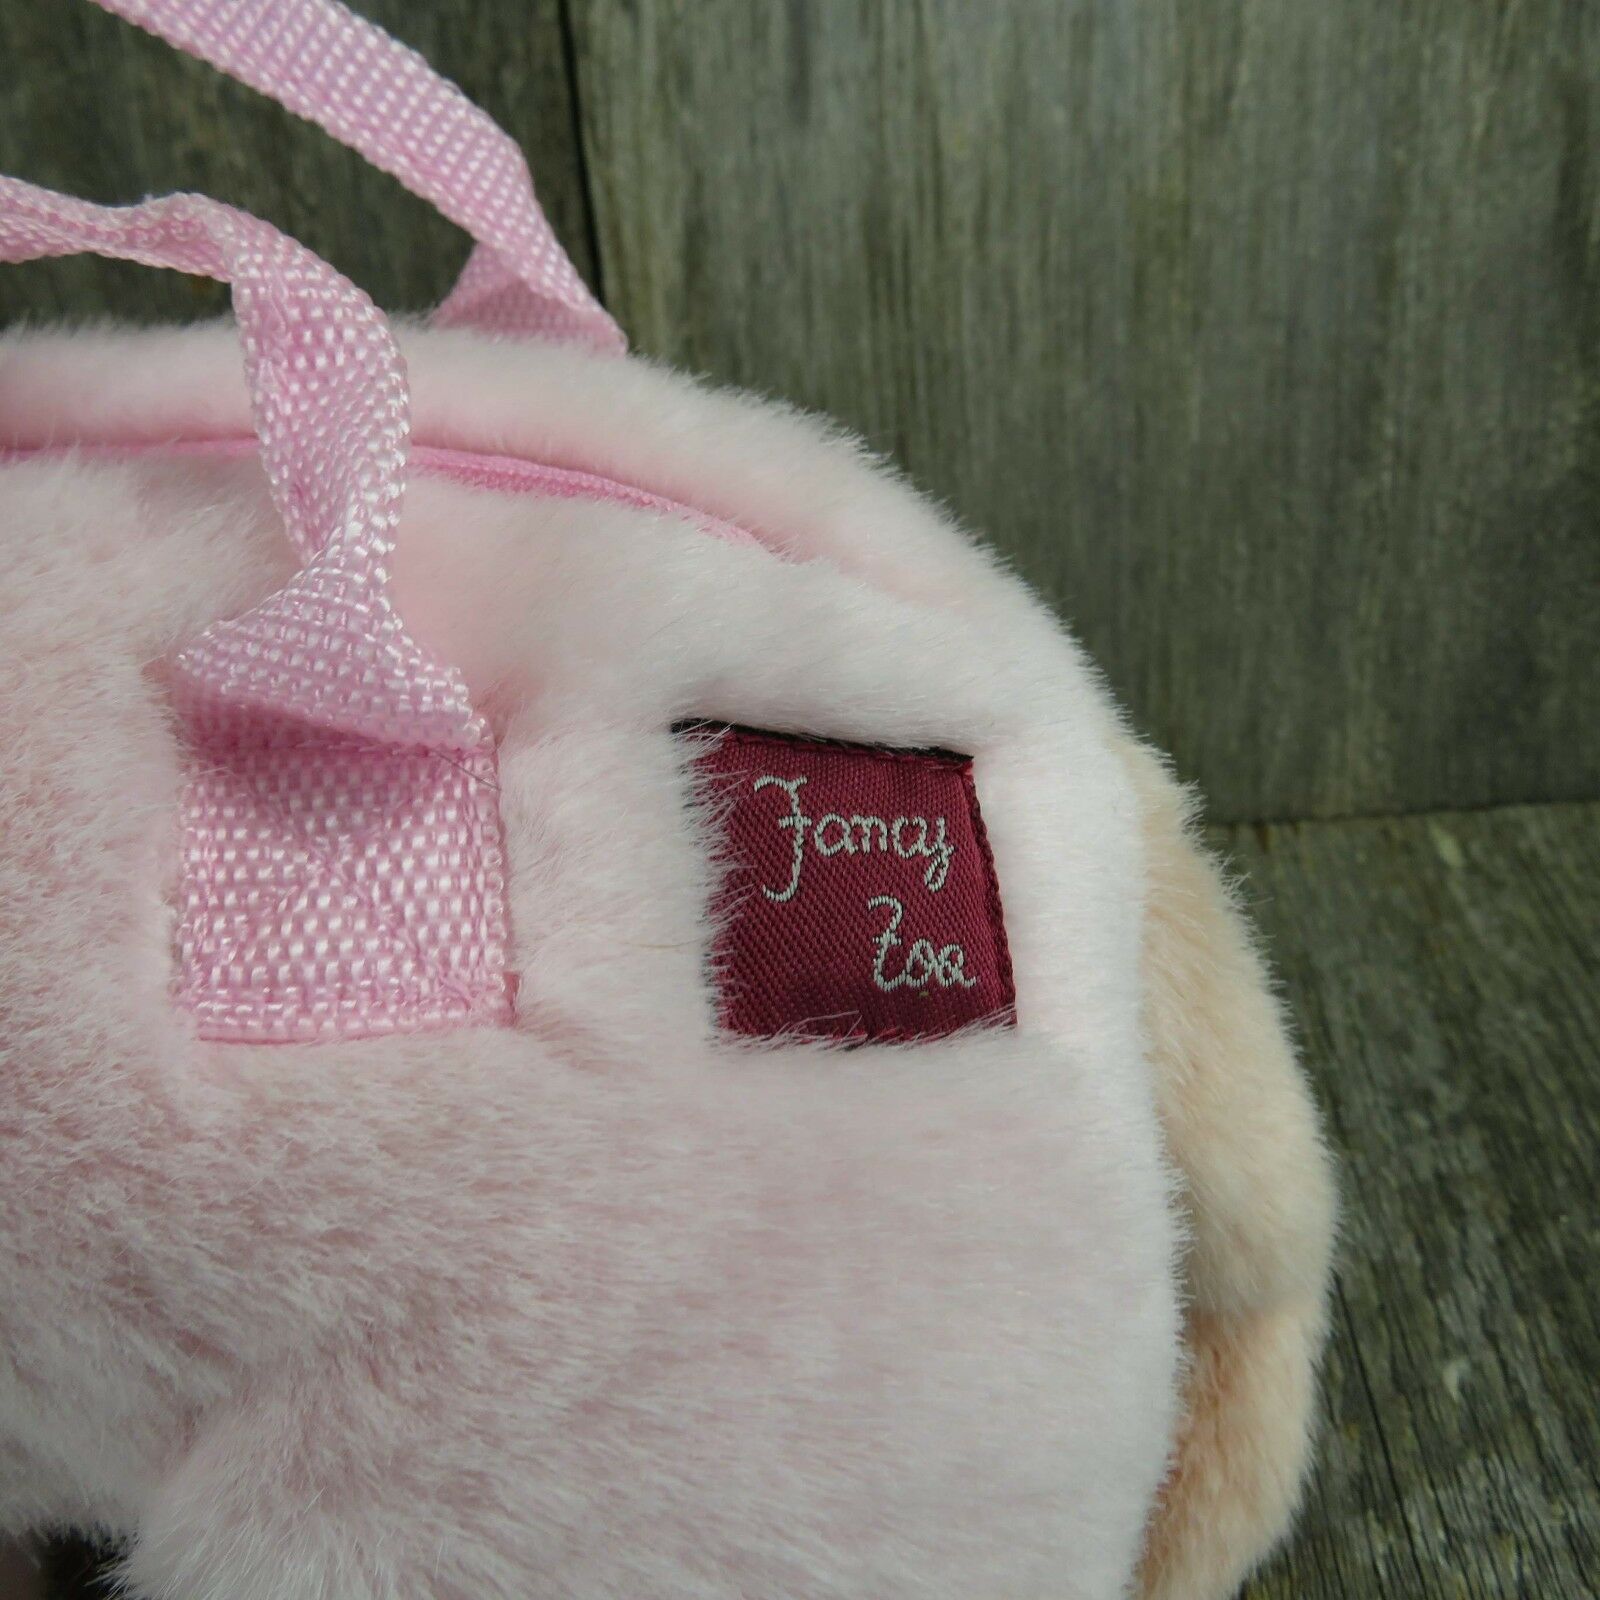 Pig Plush Pink Purse Handbag Stuffed Animal Bag Fancy Zoo Farm - At Grandma's Table